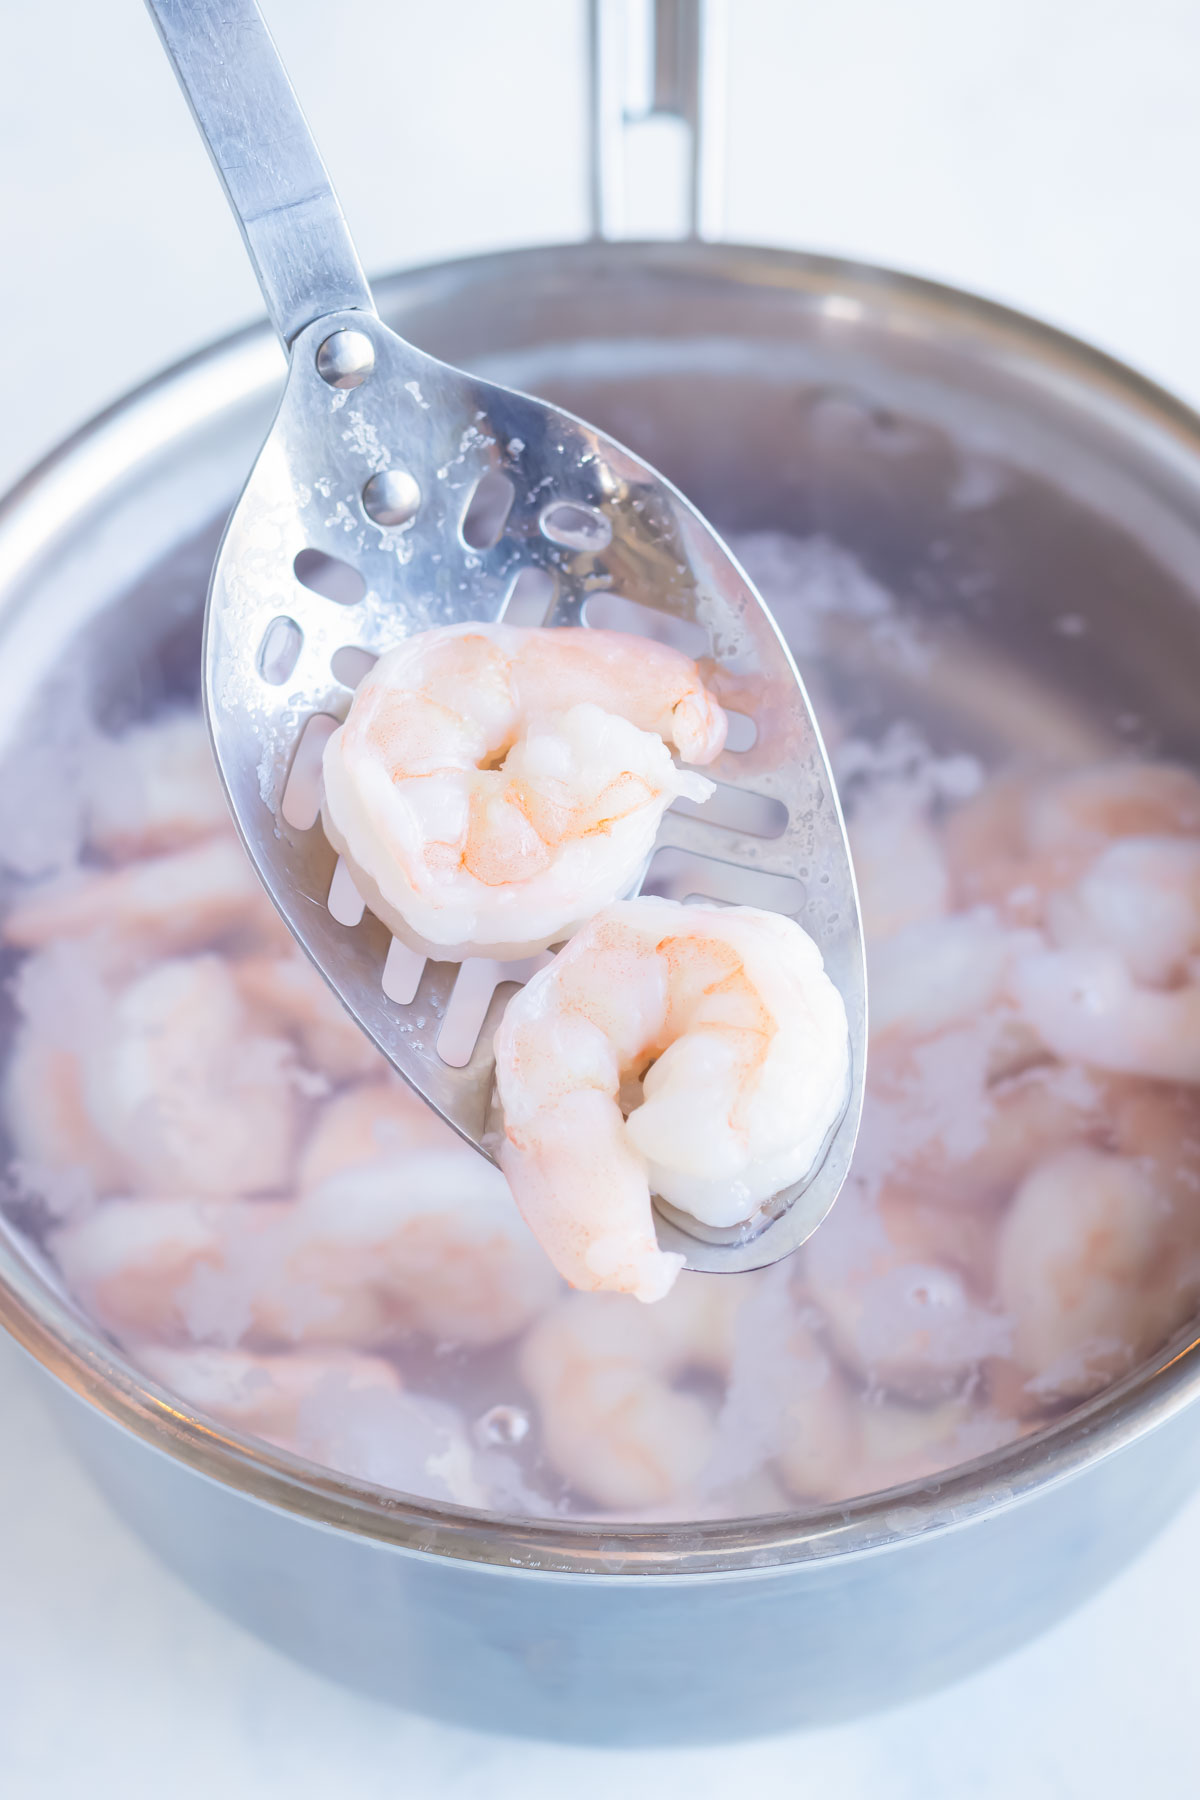 Shrimp is boiled in a pot.